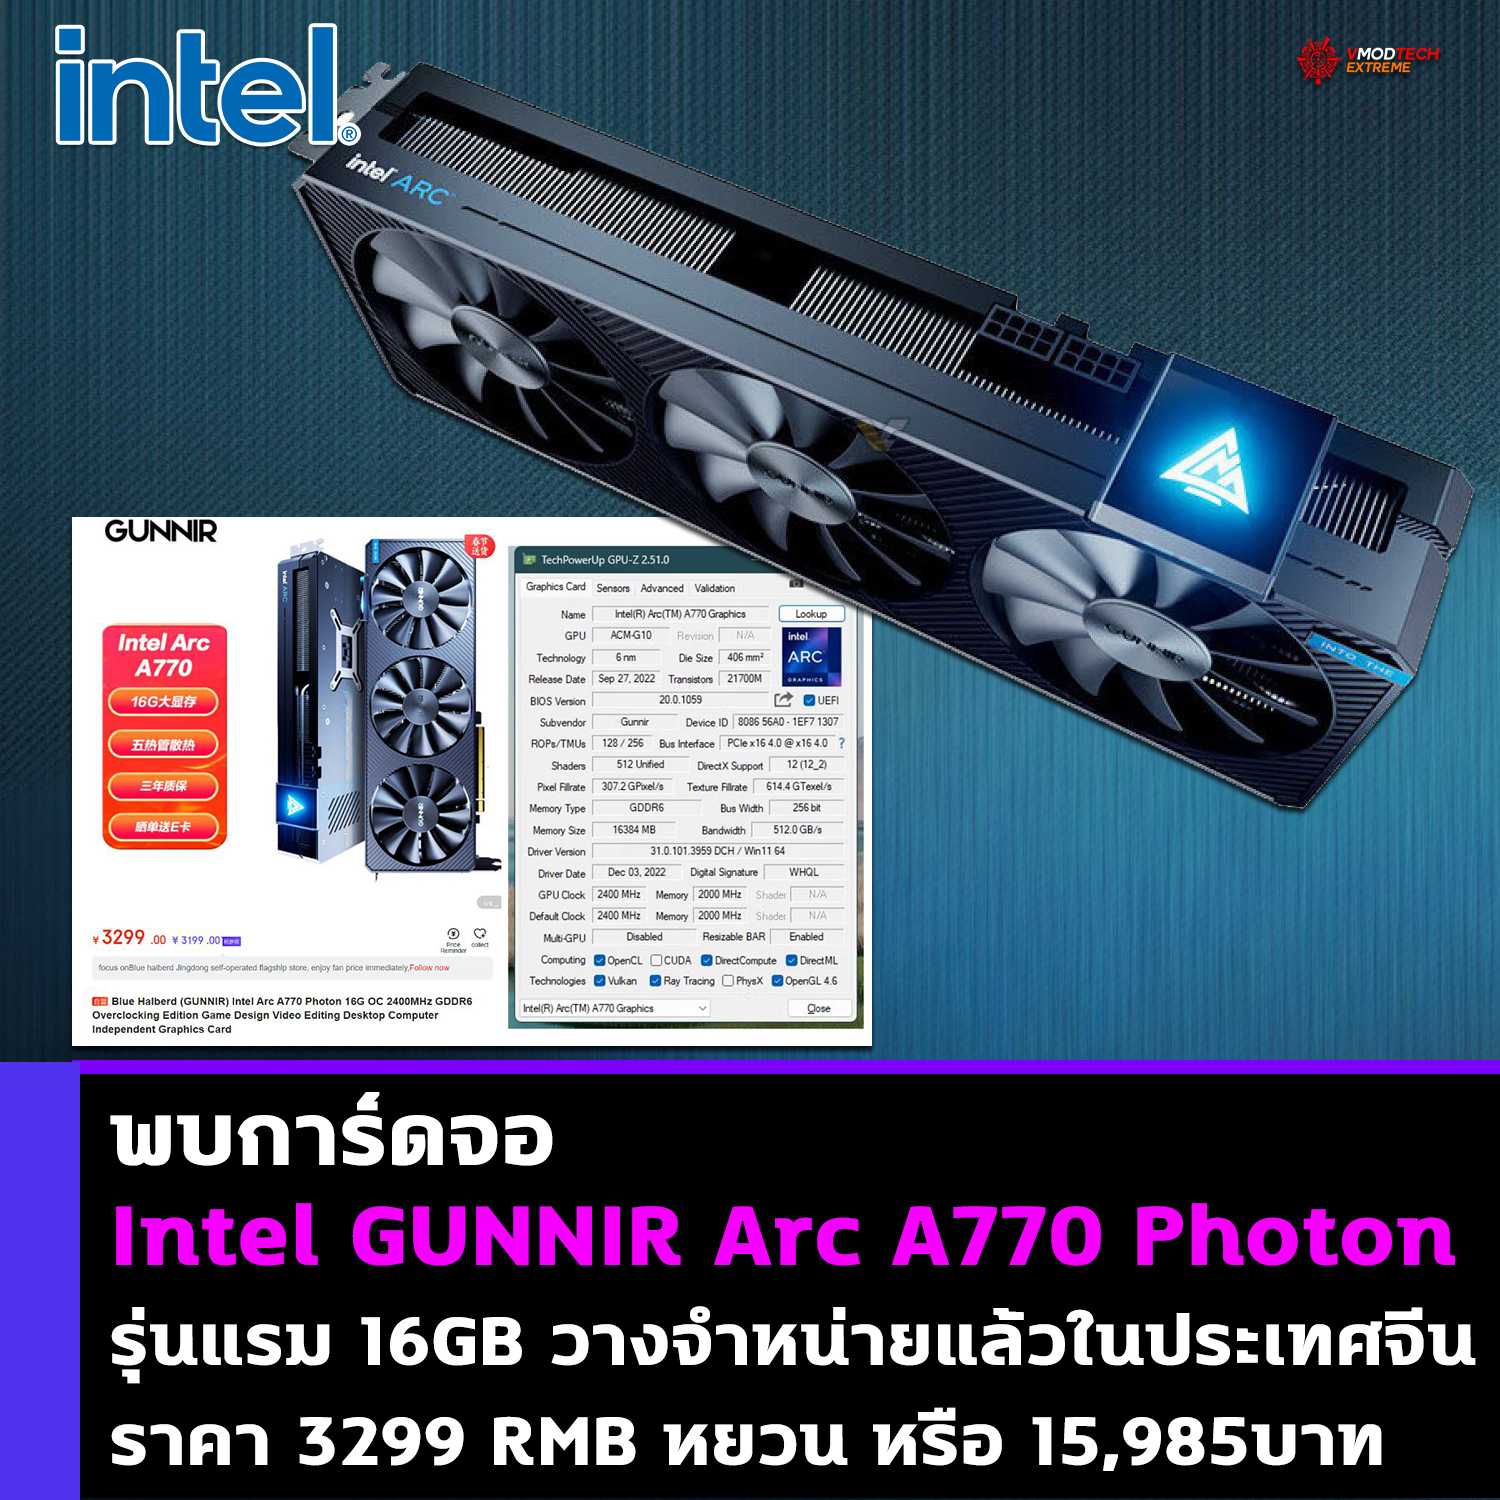 intel gunnir arc a770 photon 16gb พบการ์ดจอ Intel GUNNIR Arc A770 Photon รุ่นแรม 16GB วางจำหน่ายแล้วในประเทศจีน